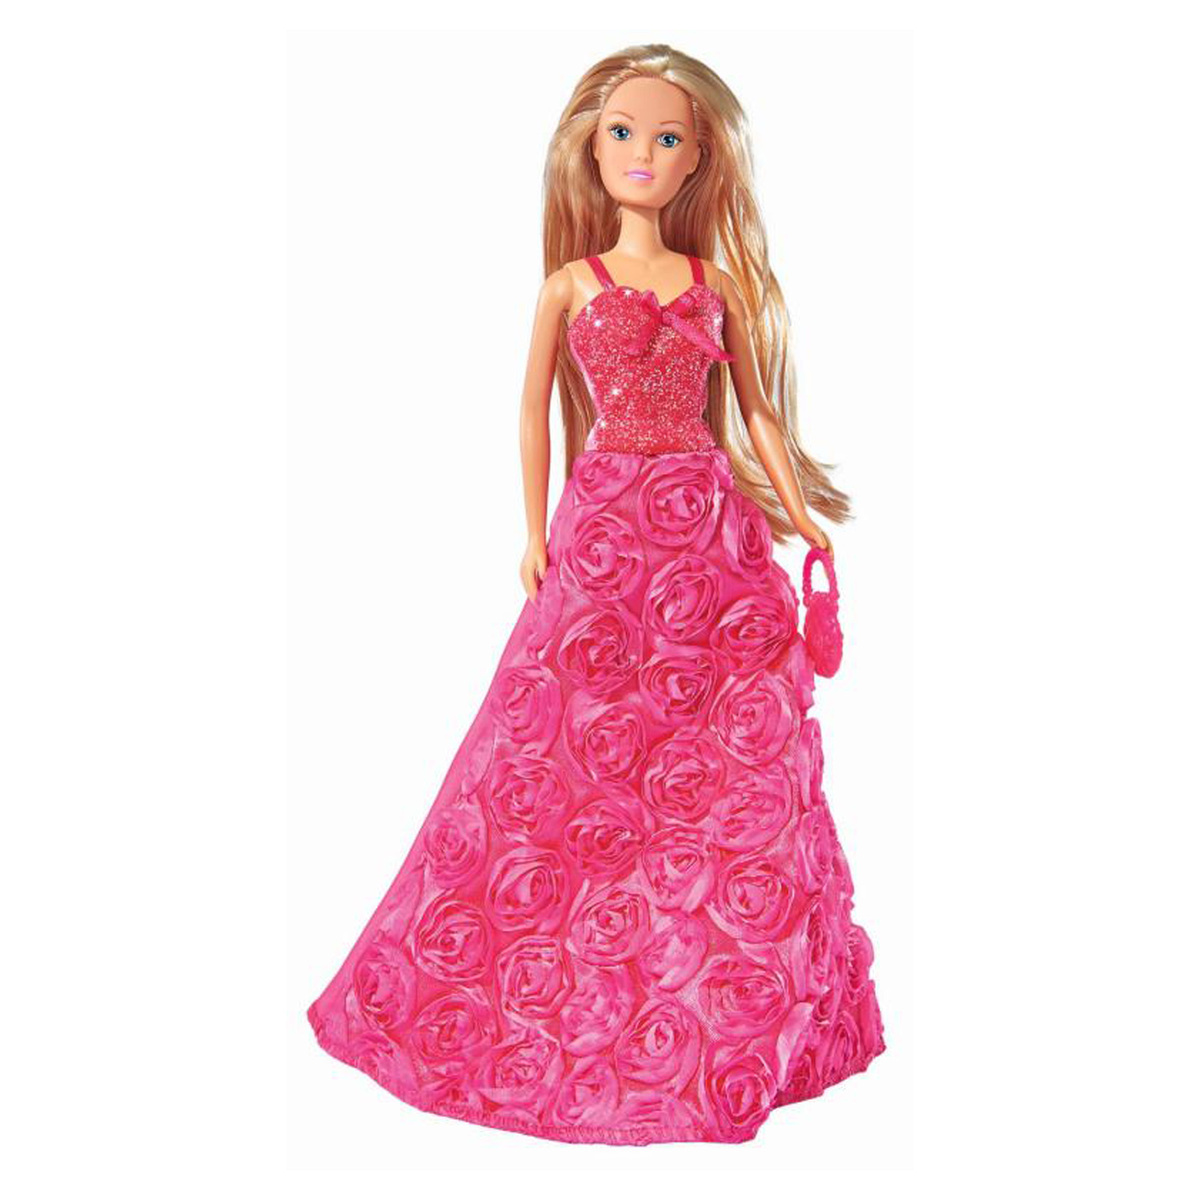 Steffi Love Princess Gala Fashion Doll, Assorted, 5739003